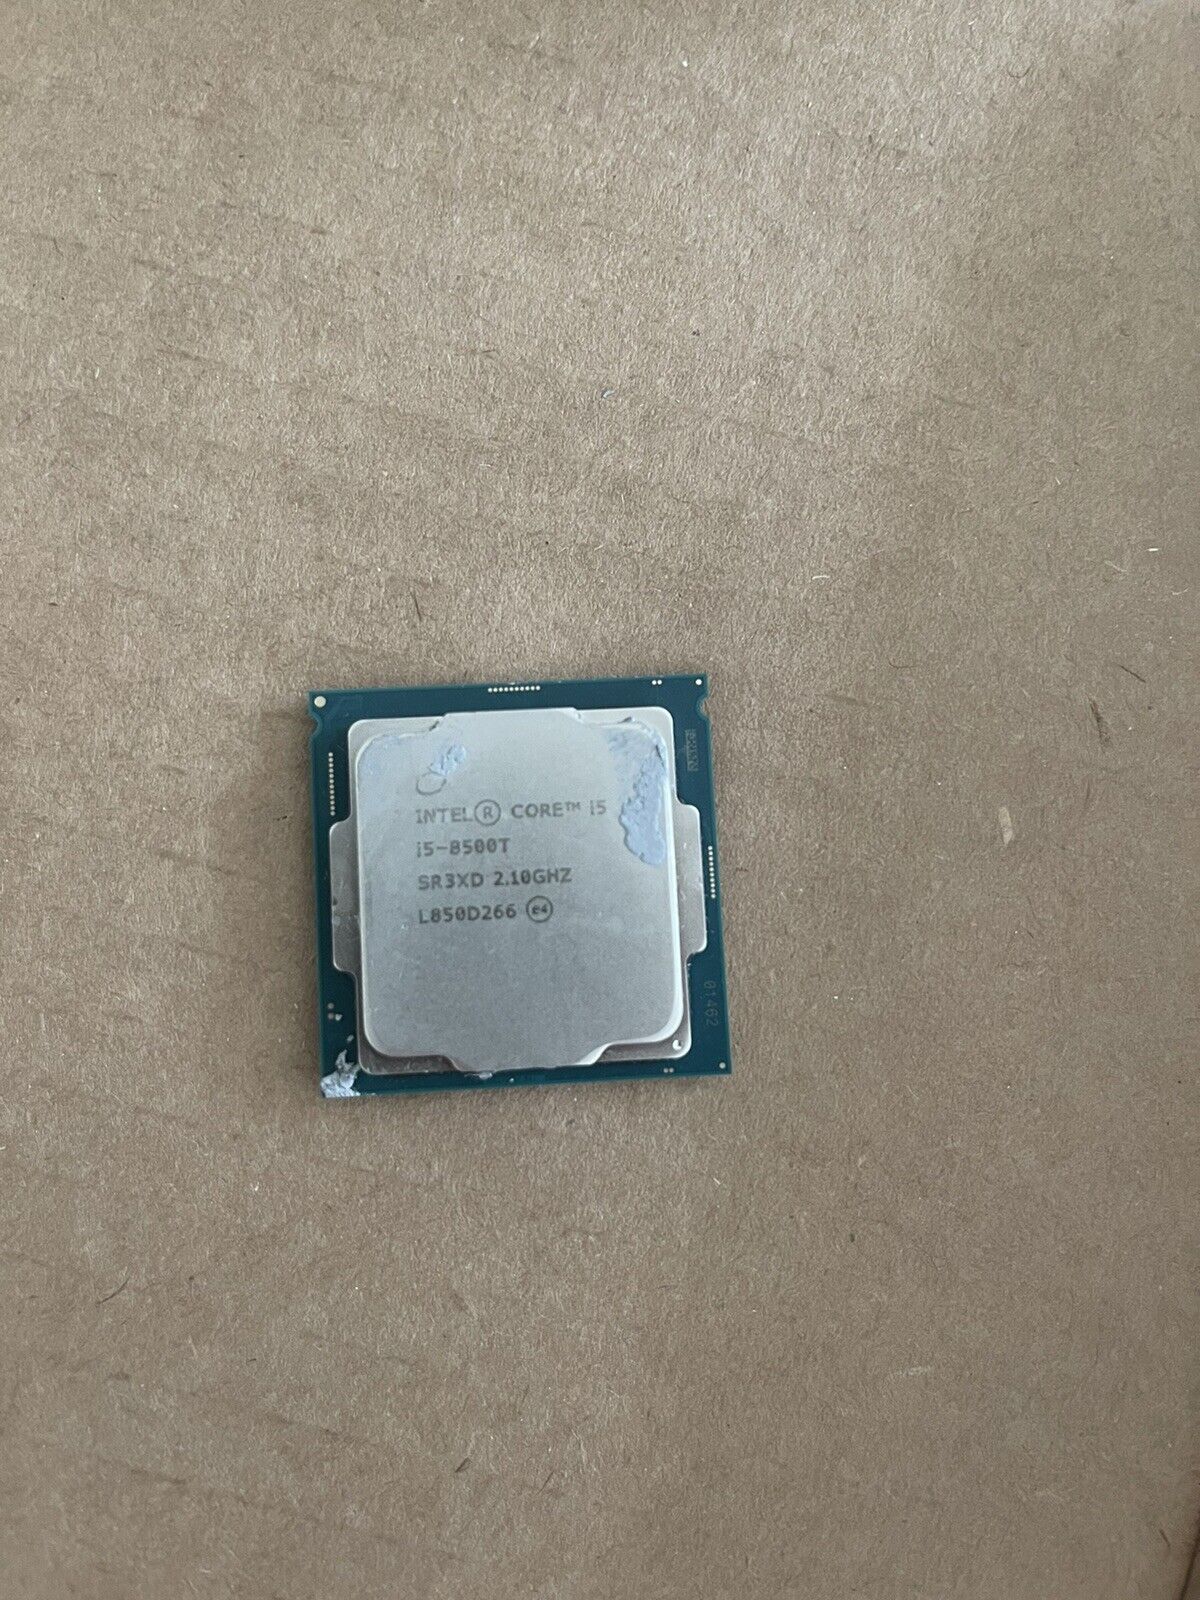 Intel Core i5-8500T 2.1GHz  CPU Processor SR3XD TESTED